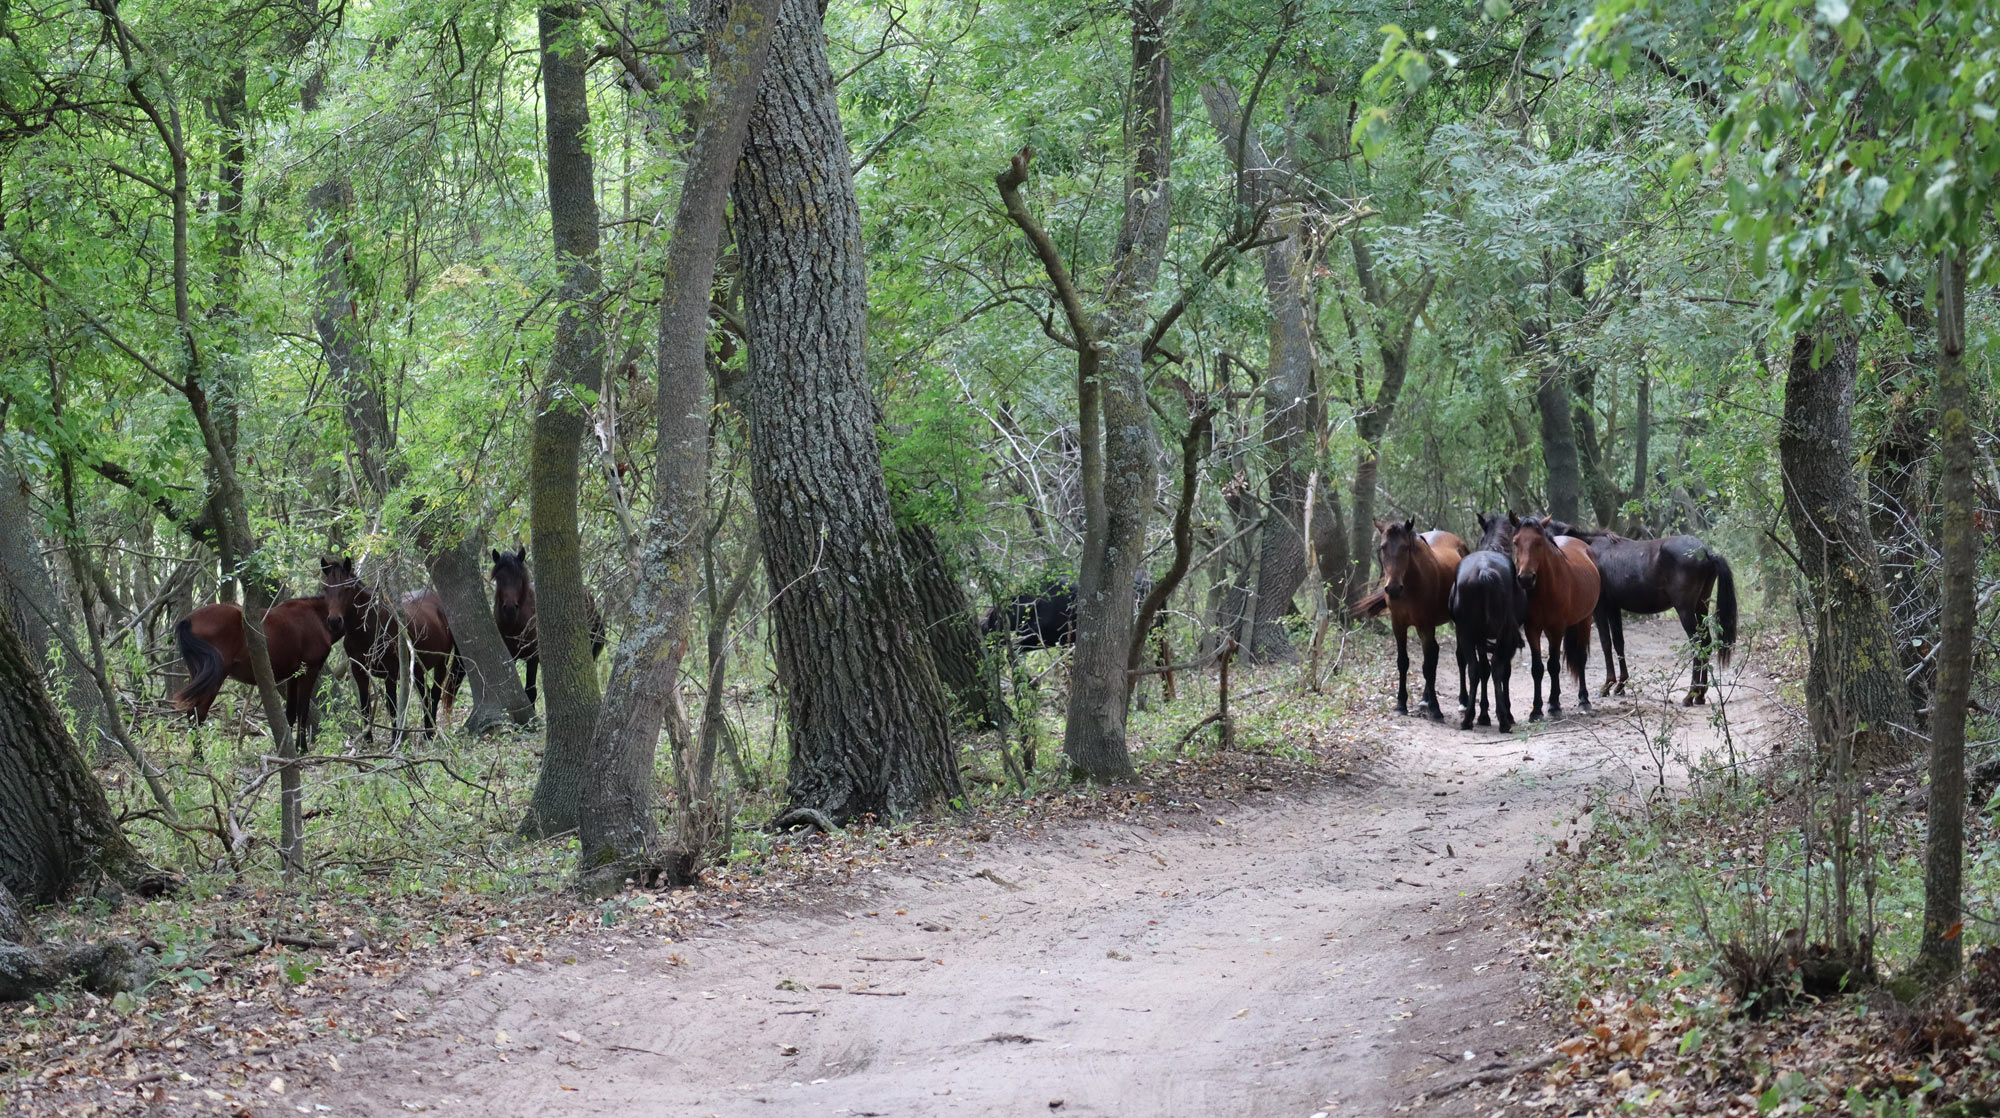 Wild horses in the Letea Forest - Danube Delta